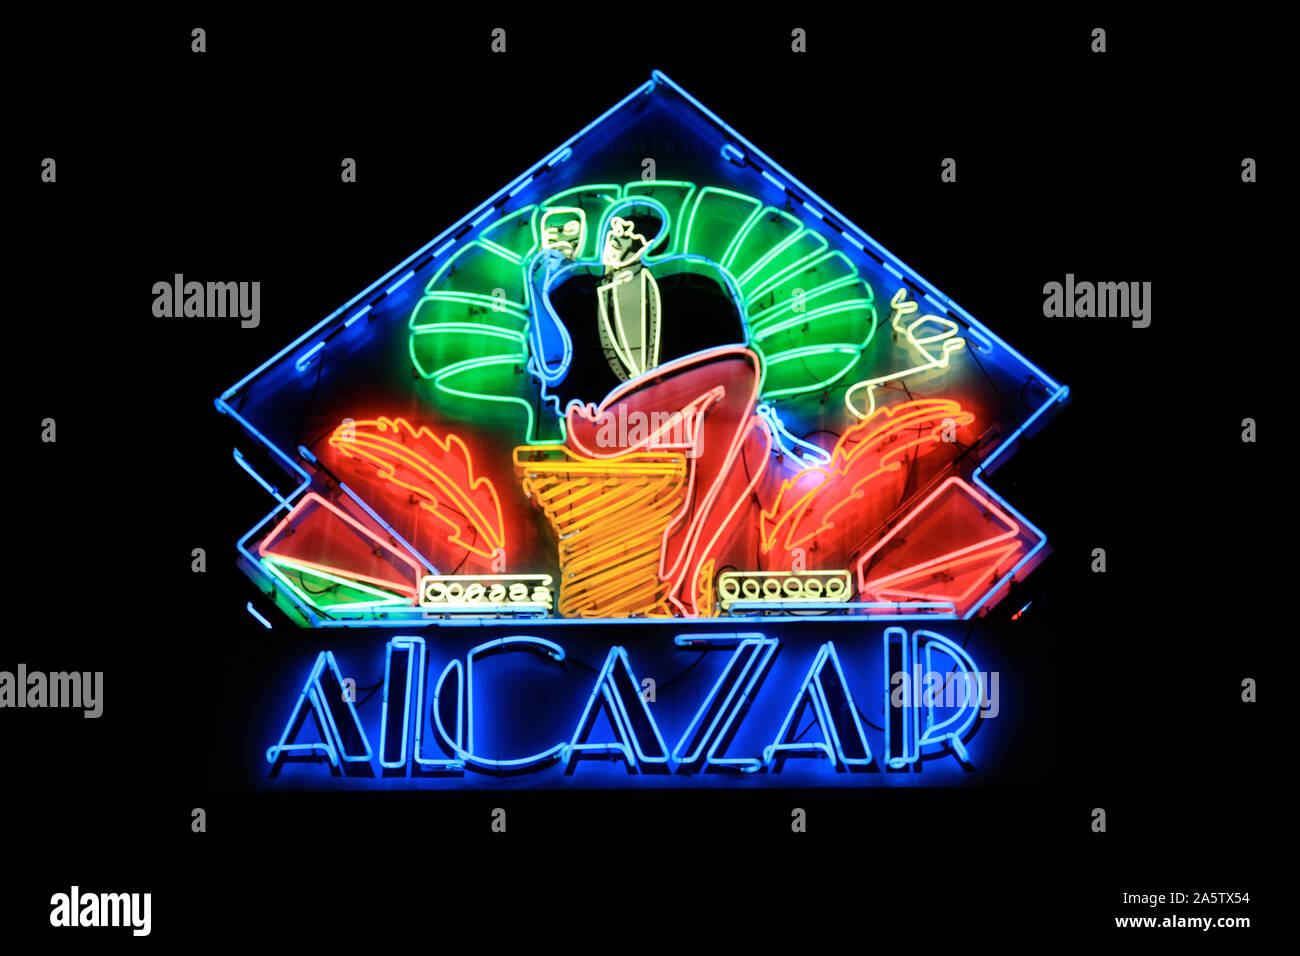 Alcazar Show in Thailand Stock Photo